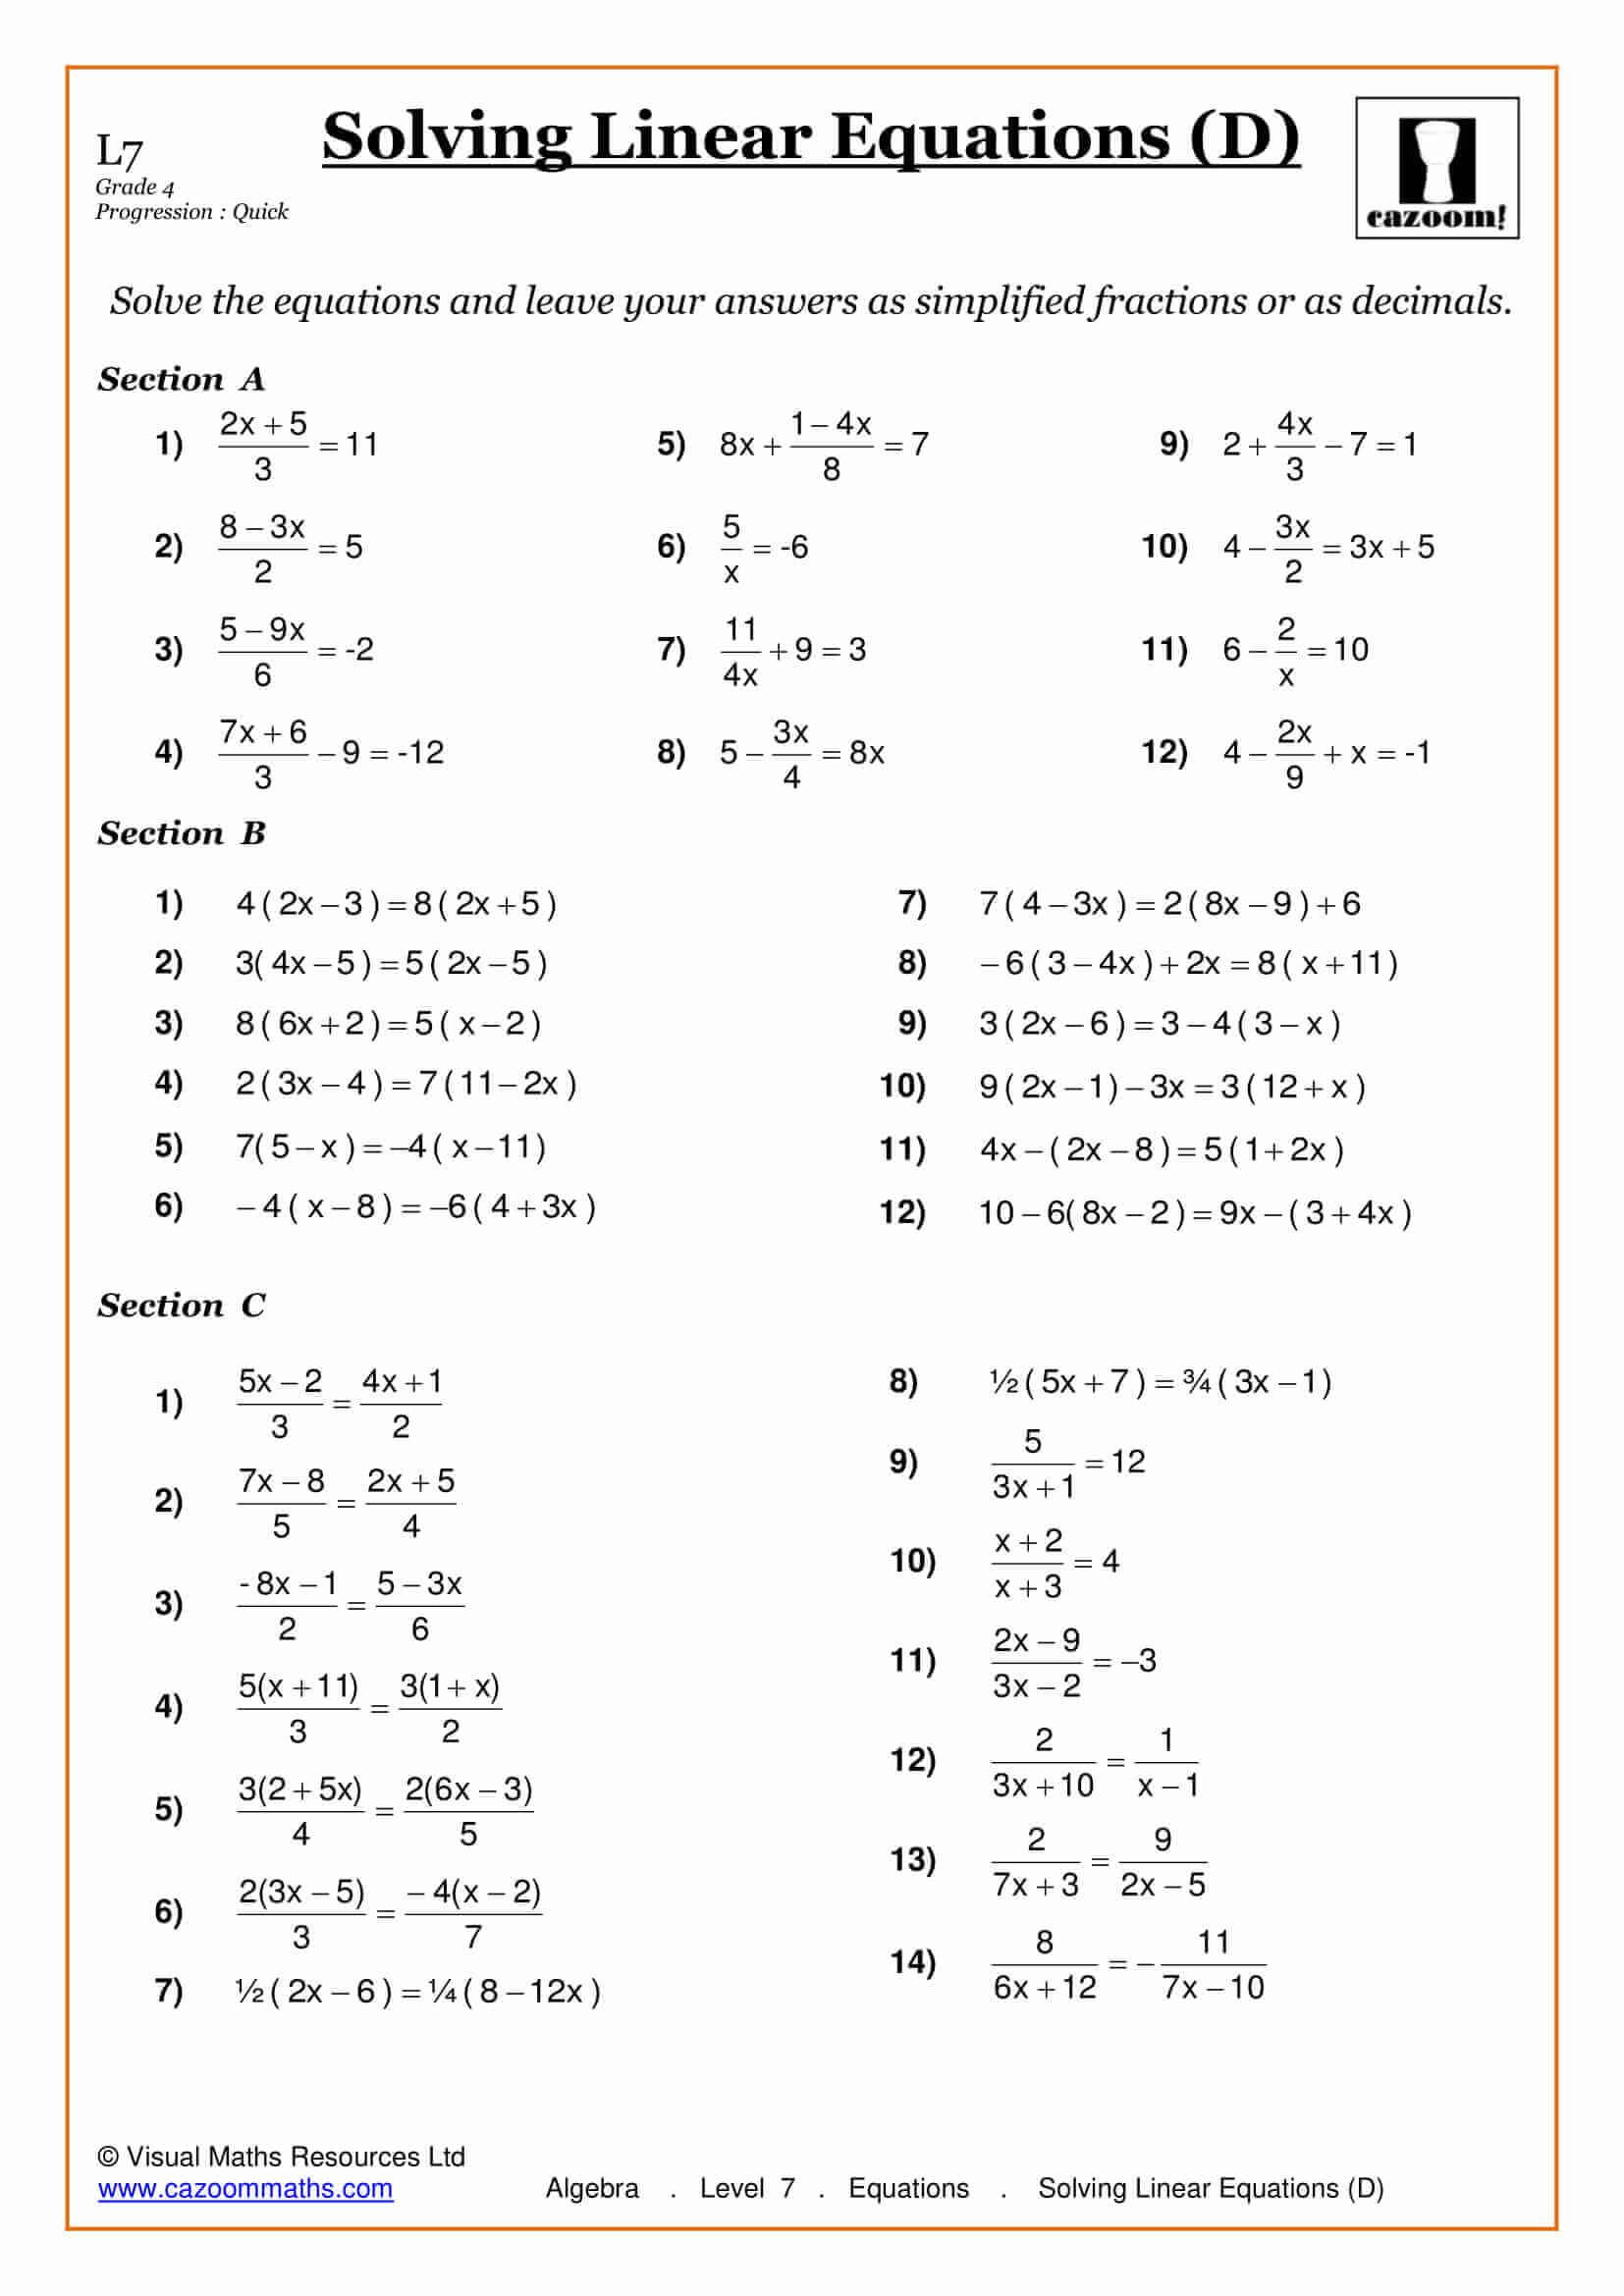 Solving Equations Maths Worksheet Algebra worksheets, Solving linear